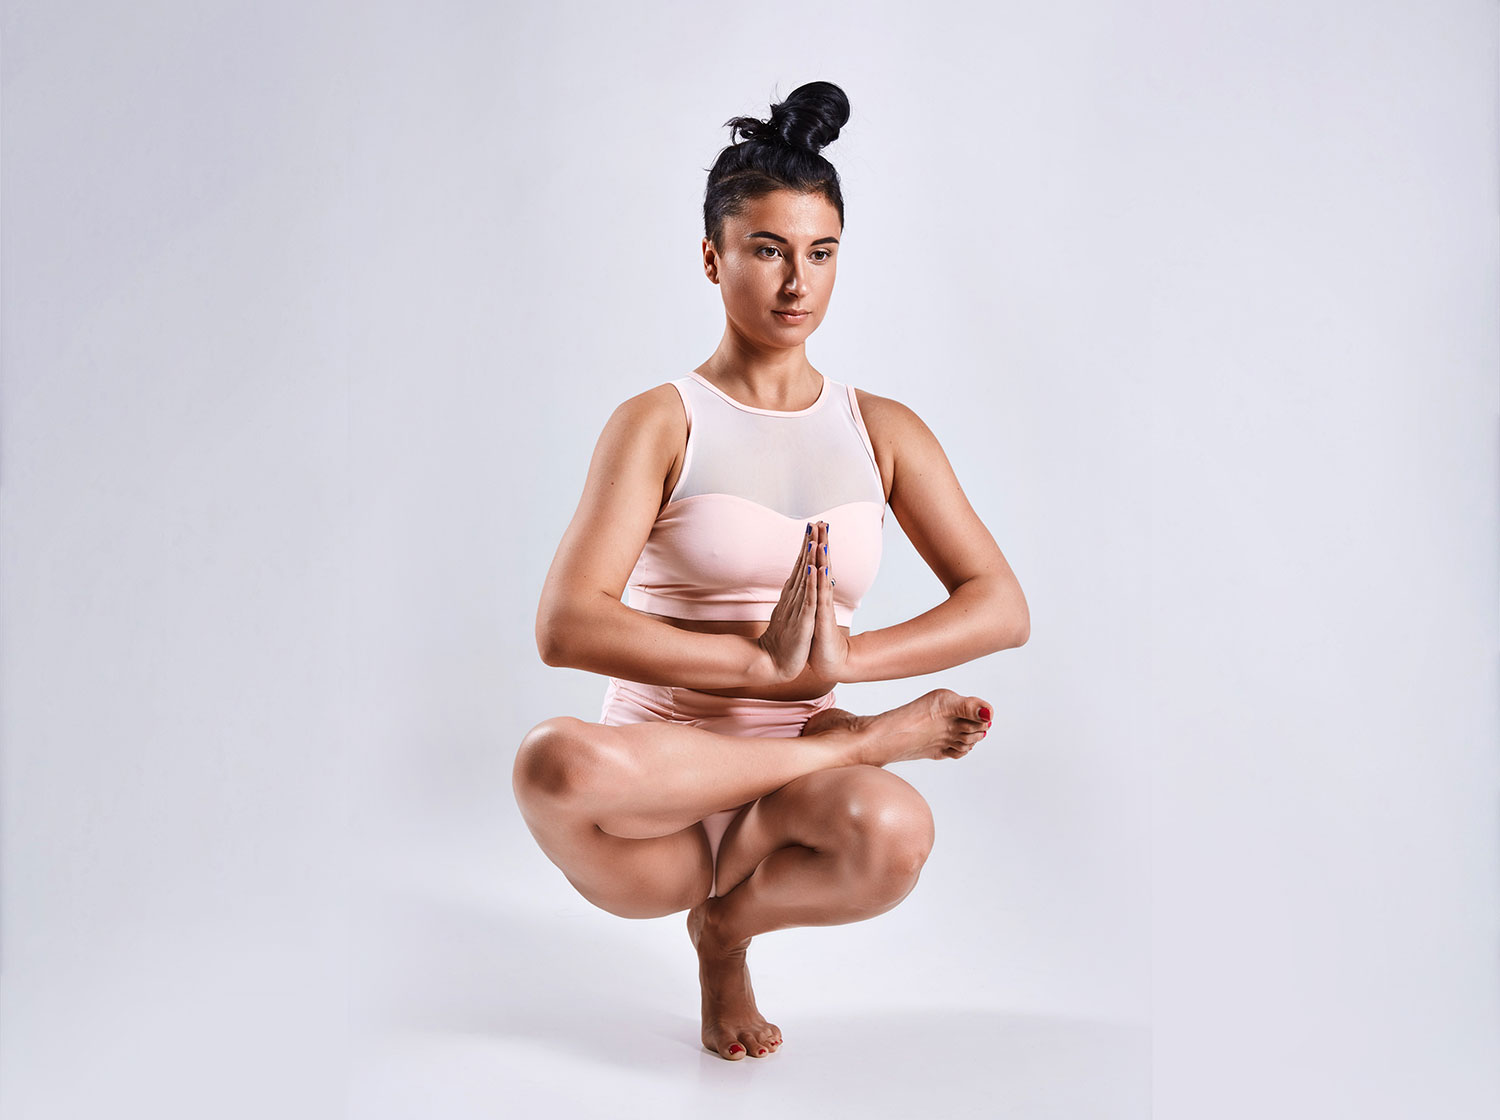 15 Jaw-Dropping Advanced Yoga Poses For Seasoned Yogis